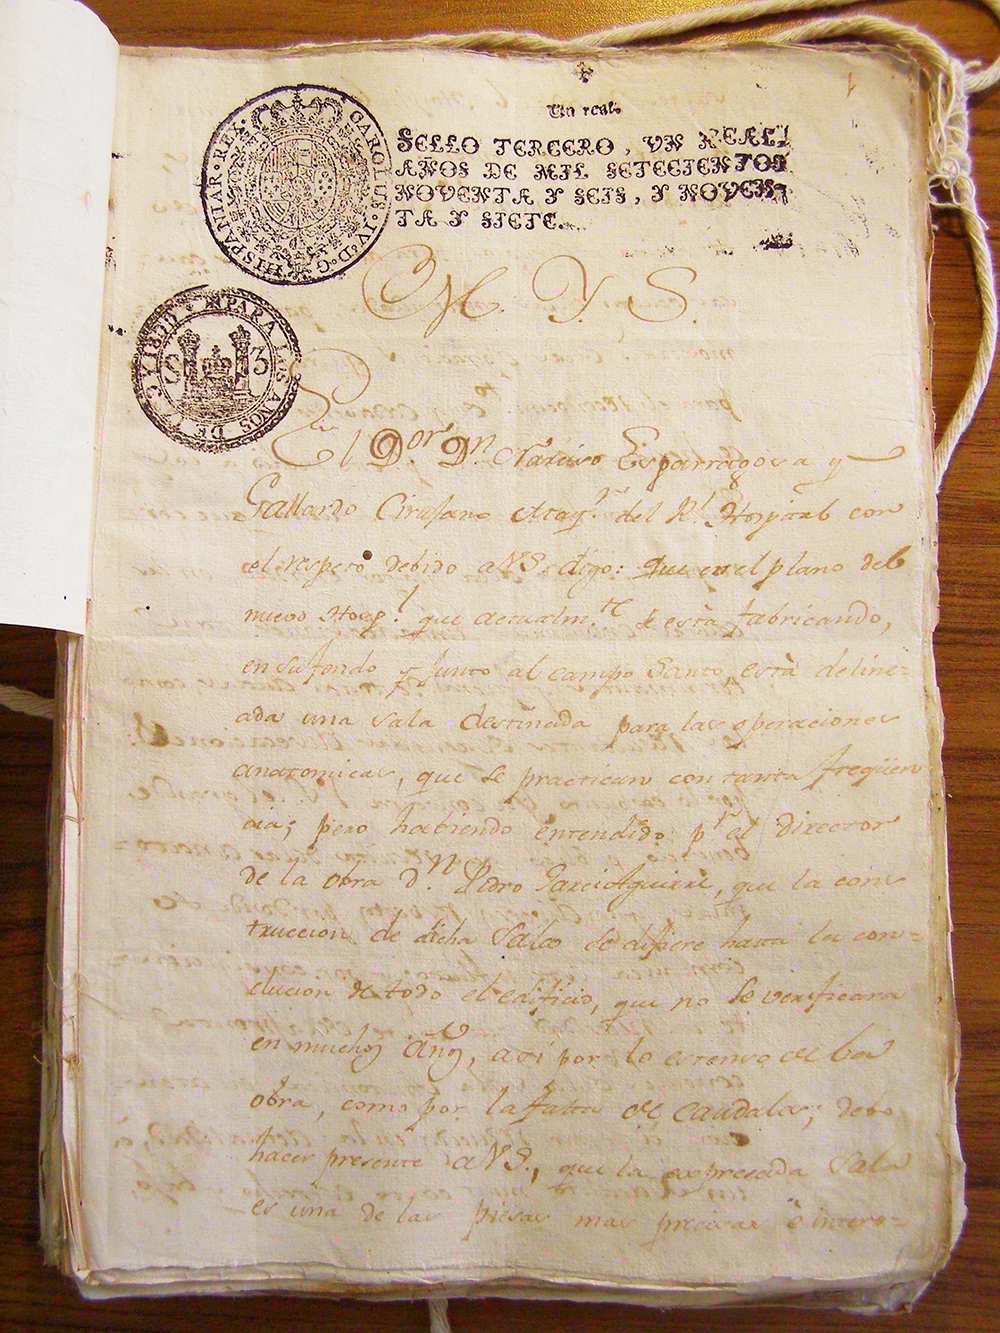 A legible document from the Archivo General de Centroamérica.